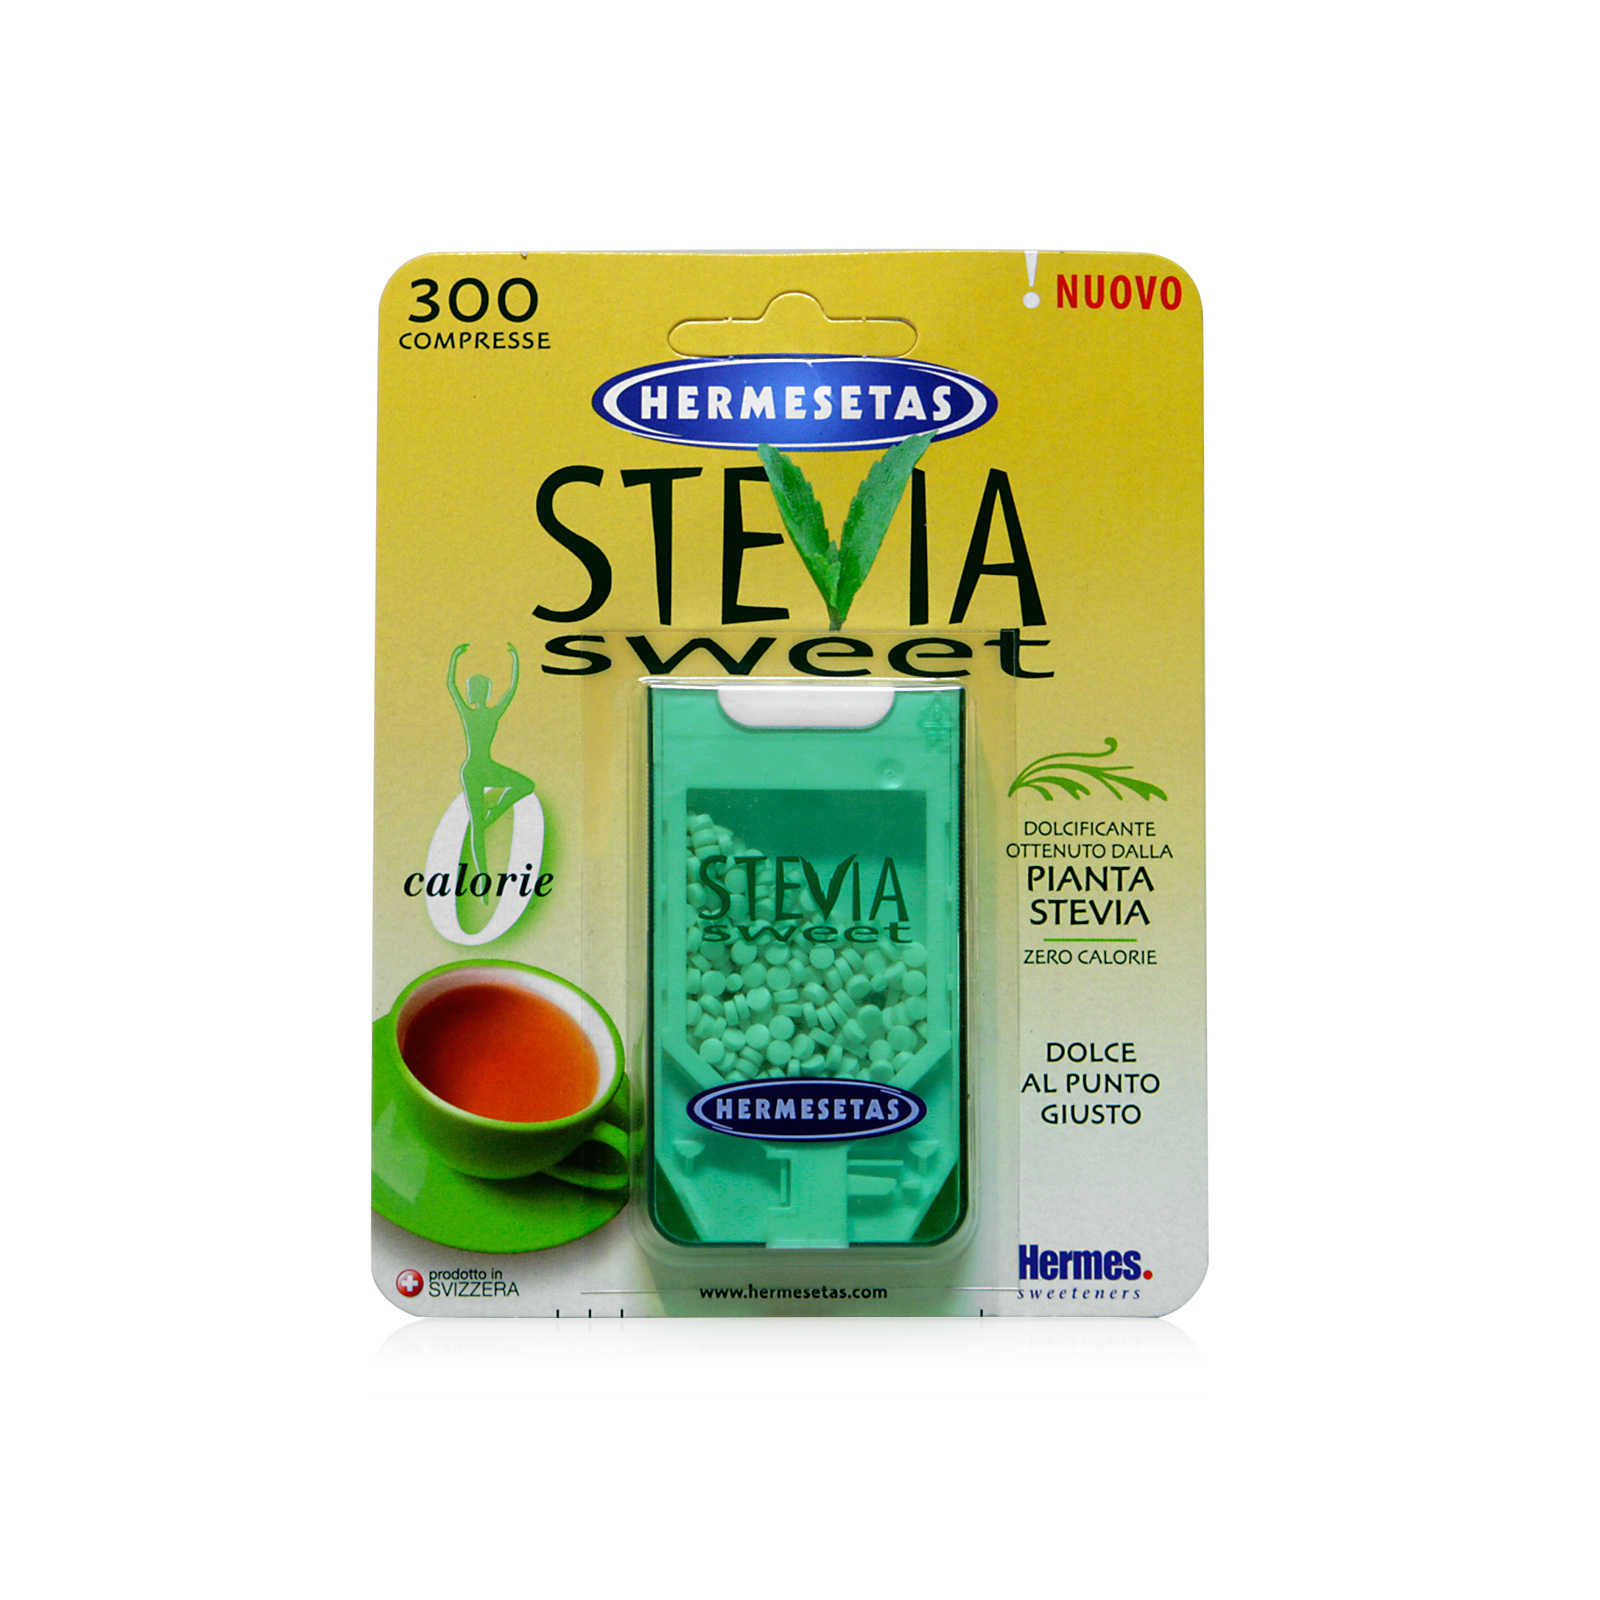 Hermesetas - Stevia Sweet - 300 Compresse